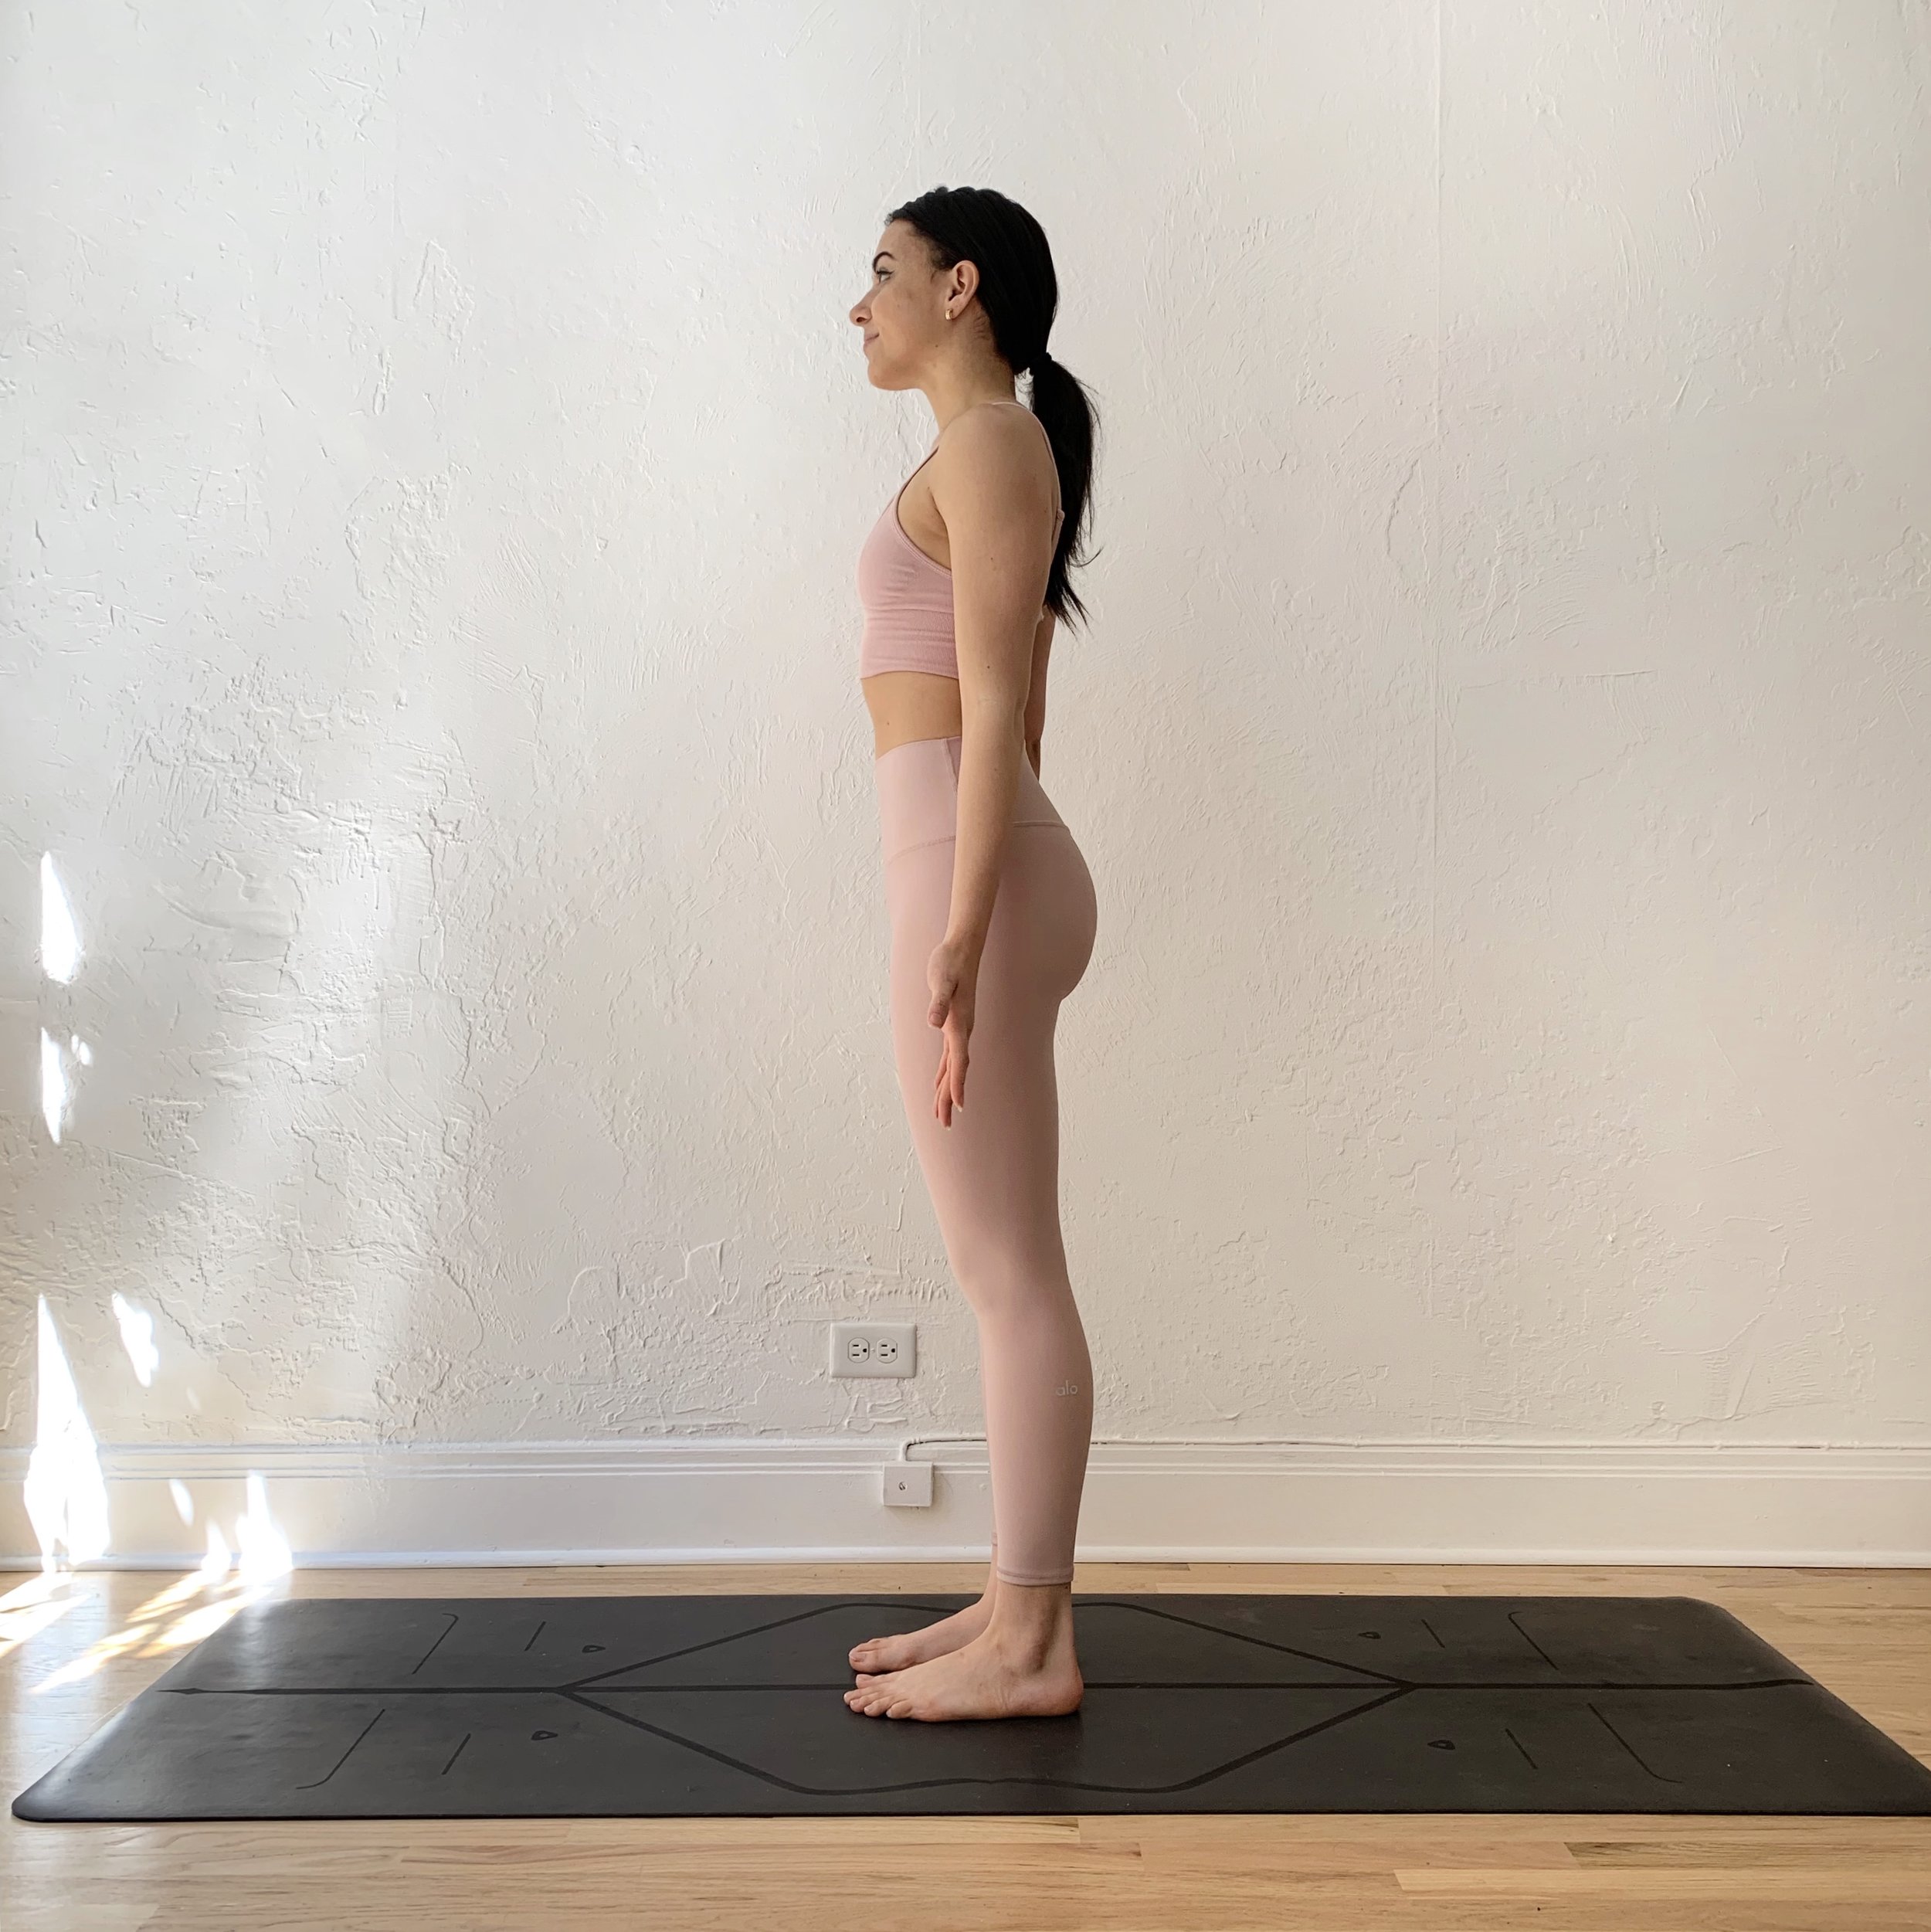 12 Beginner Yoga Poses